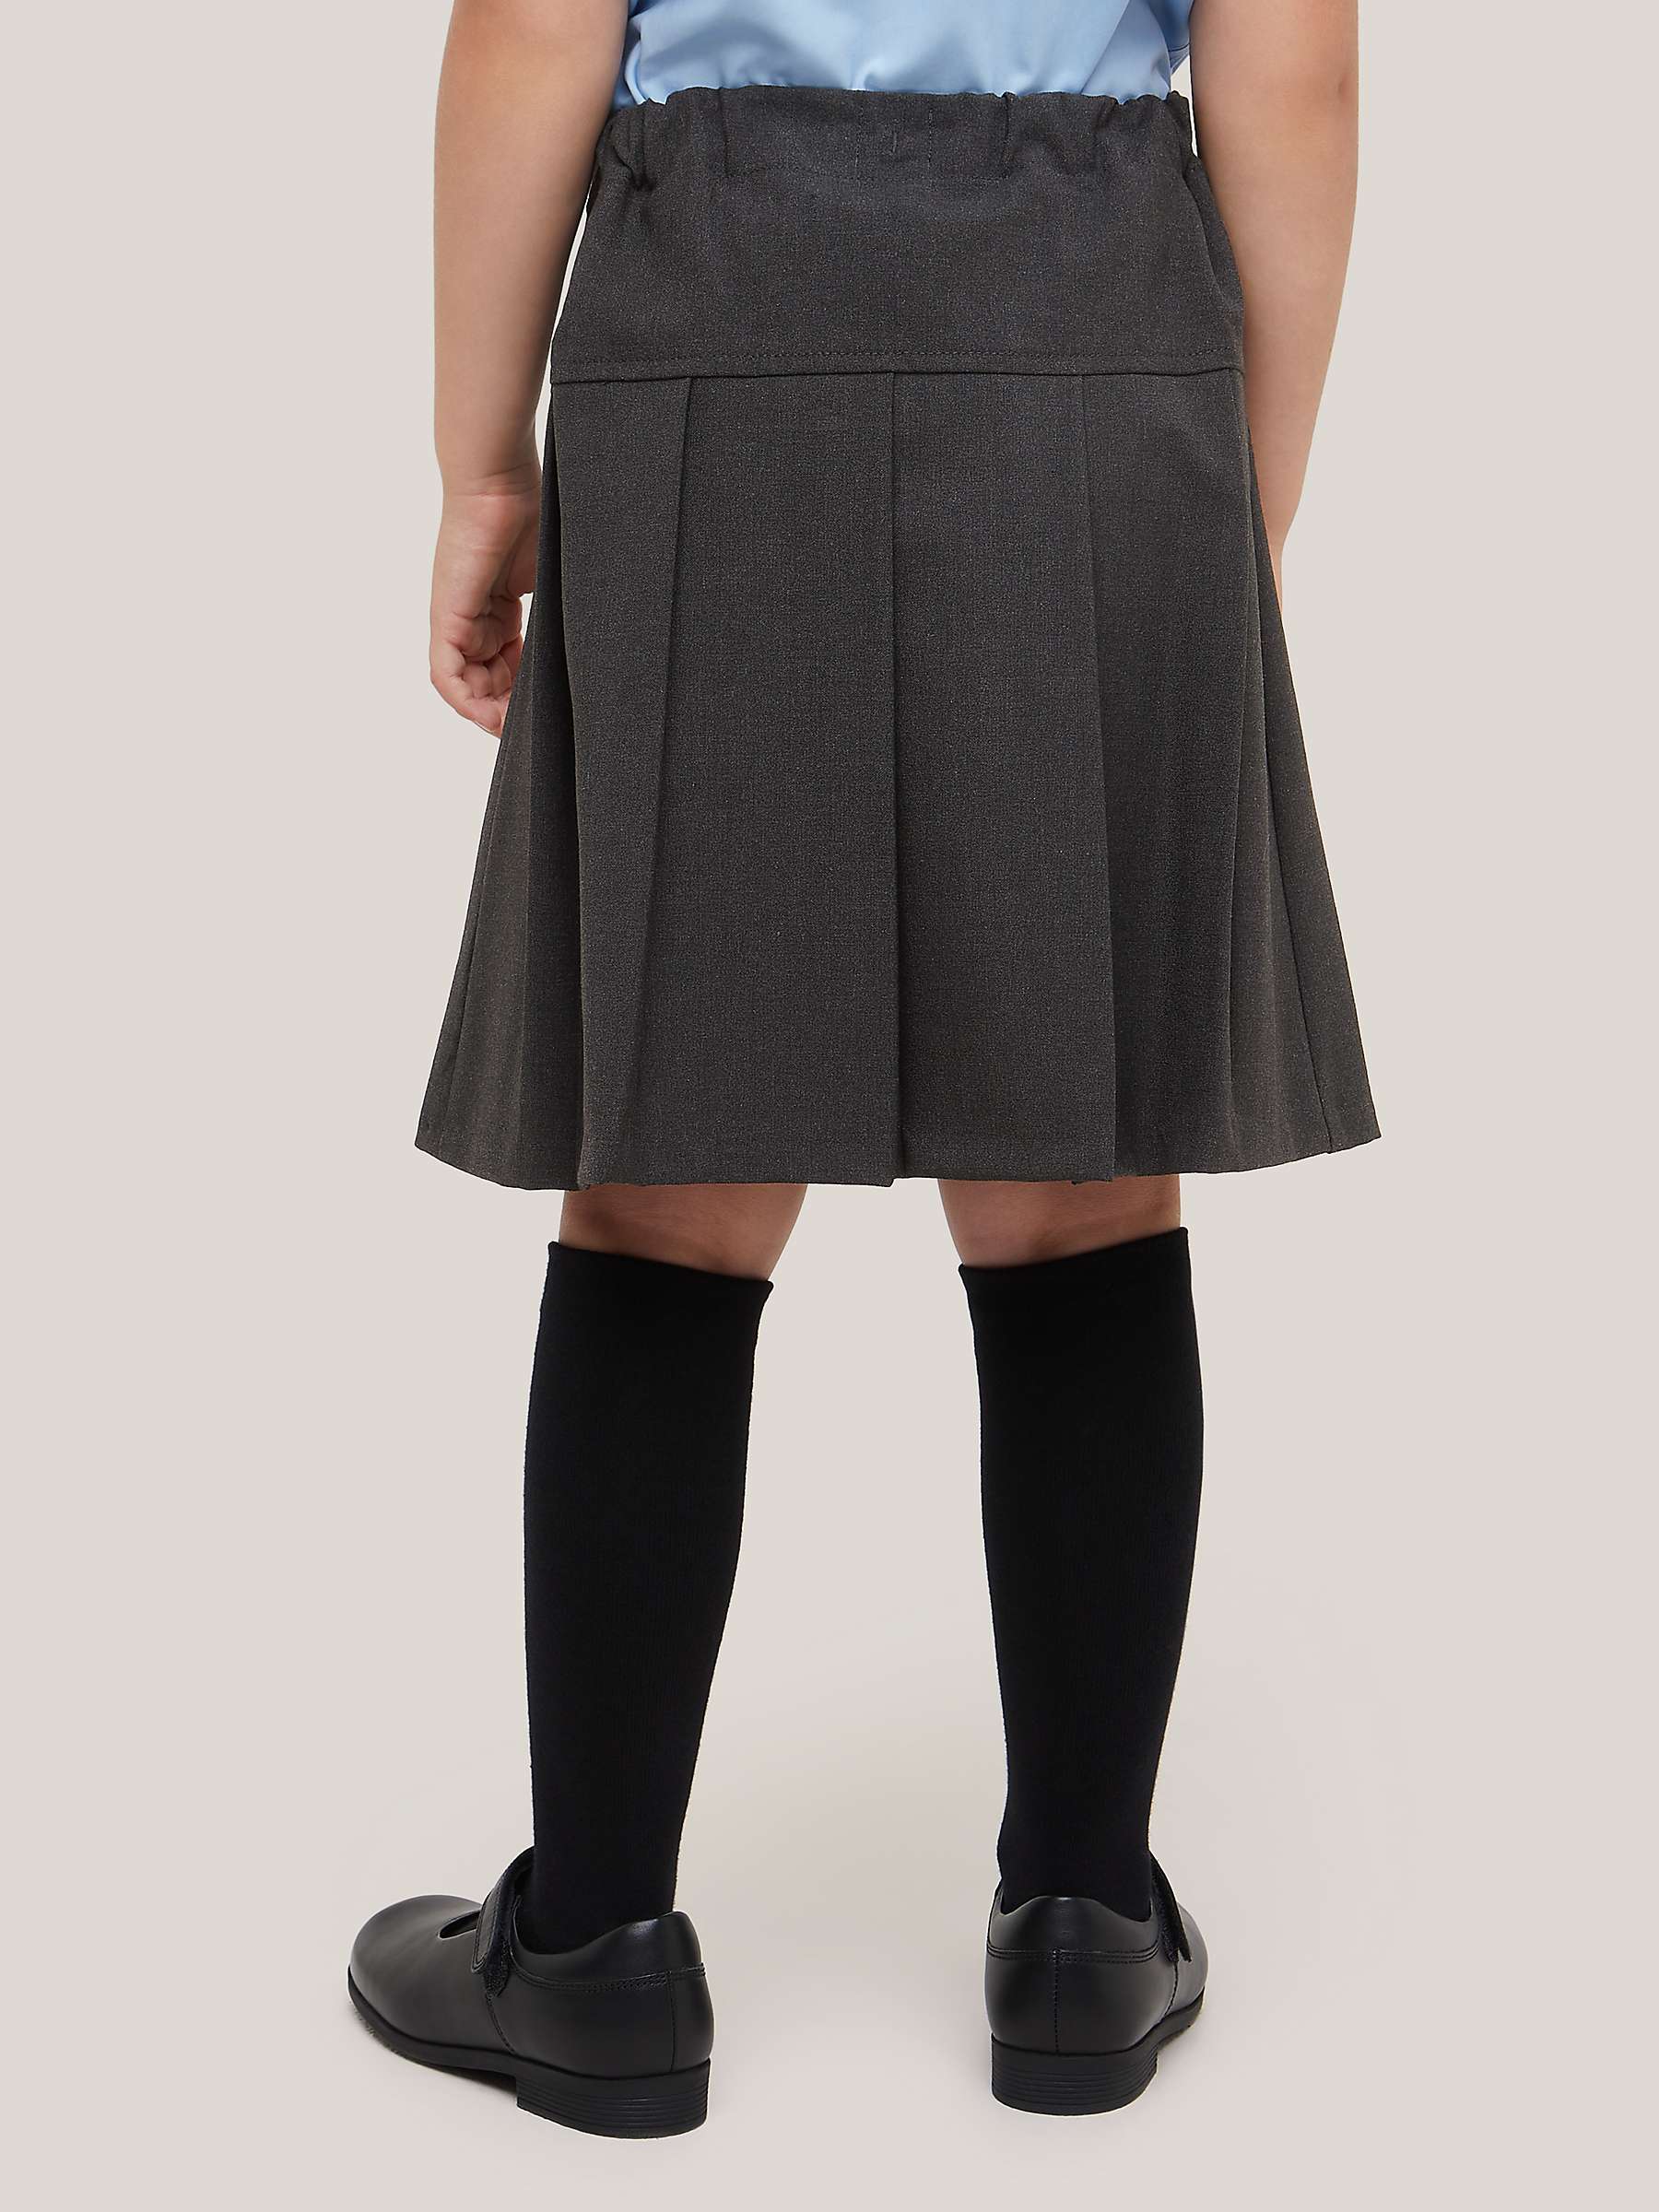 Buy John Lewis Girls' Generous Fit Adjustable Waist Pleated Stain Resistant School Skirt Online at johnlewis.com